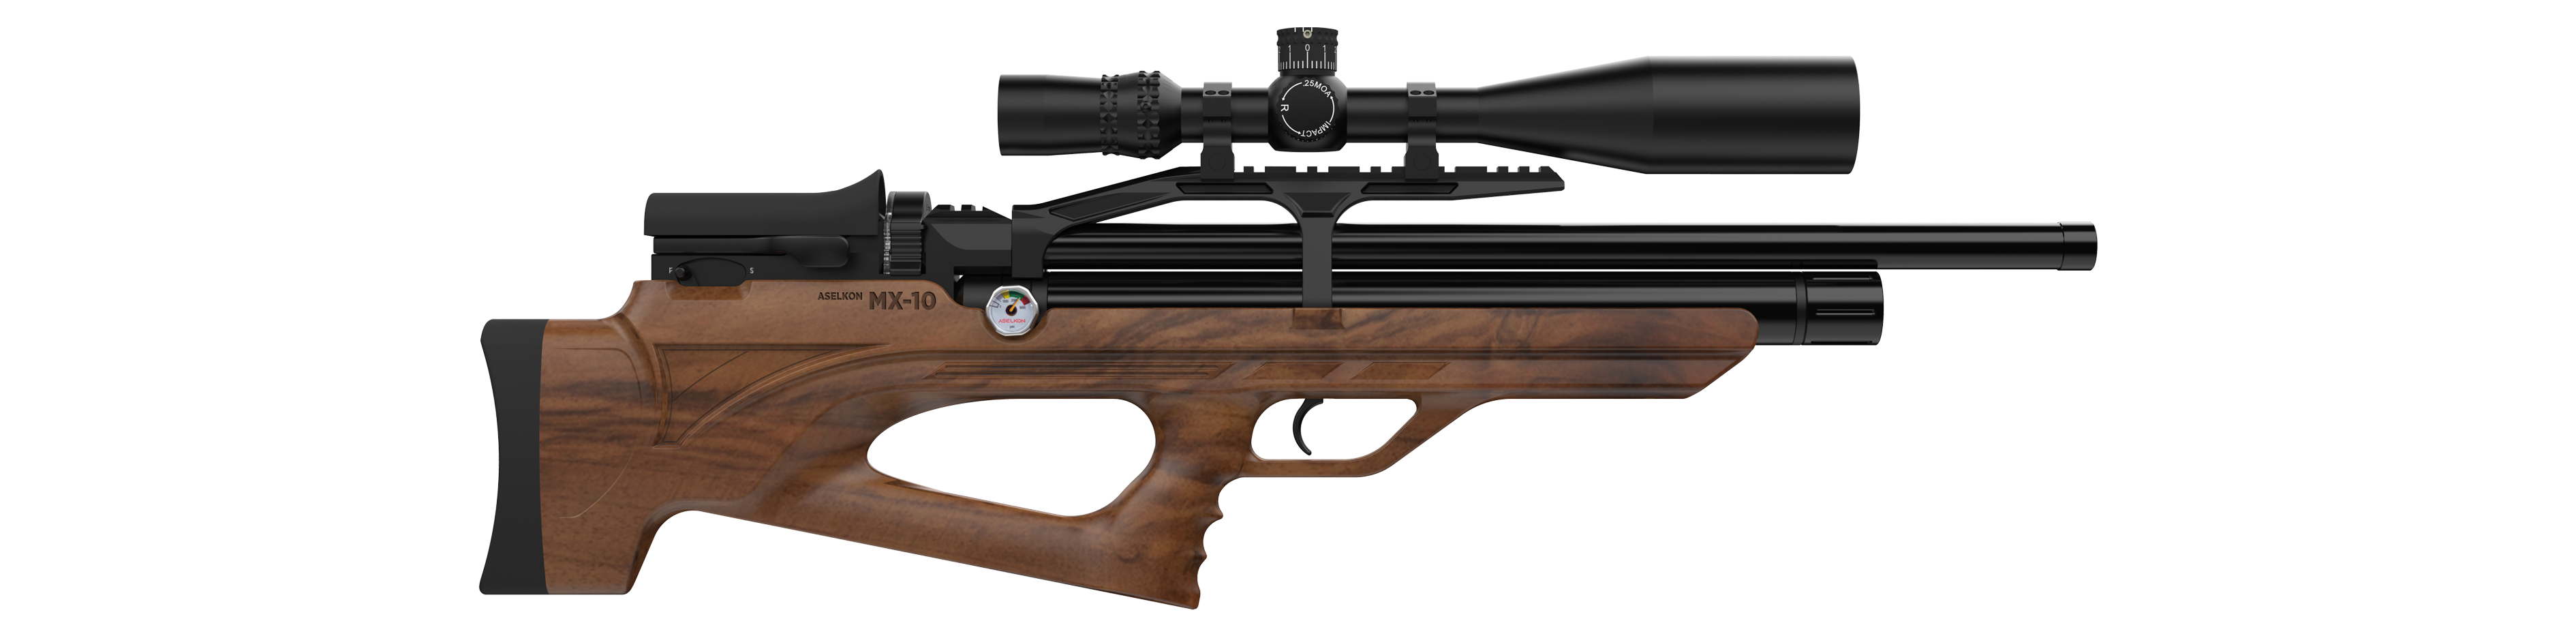 Aselkon MX10 pcp air rifle wood stock model